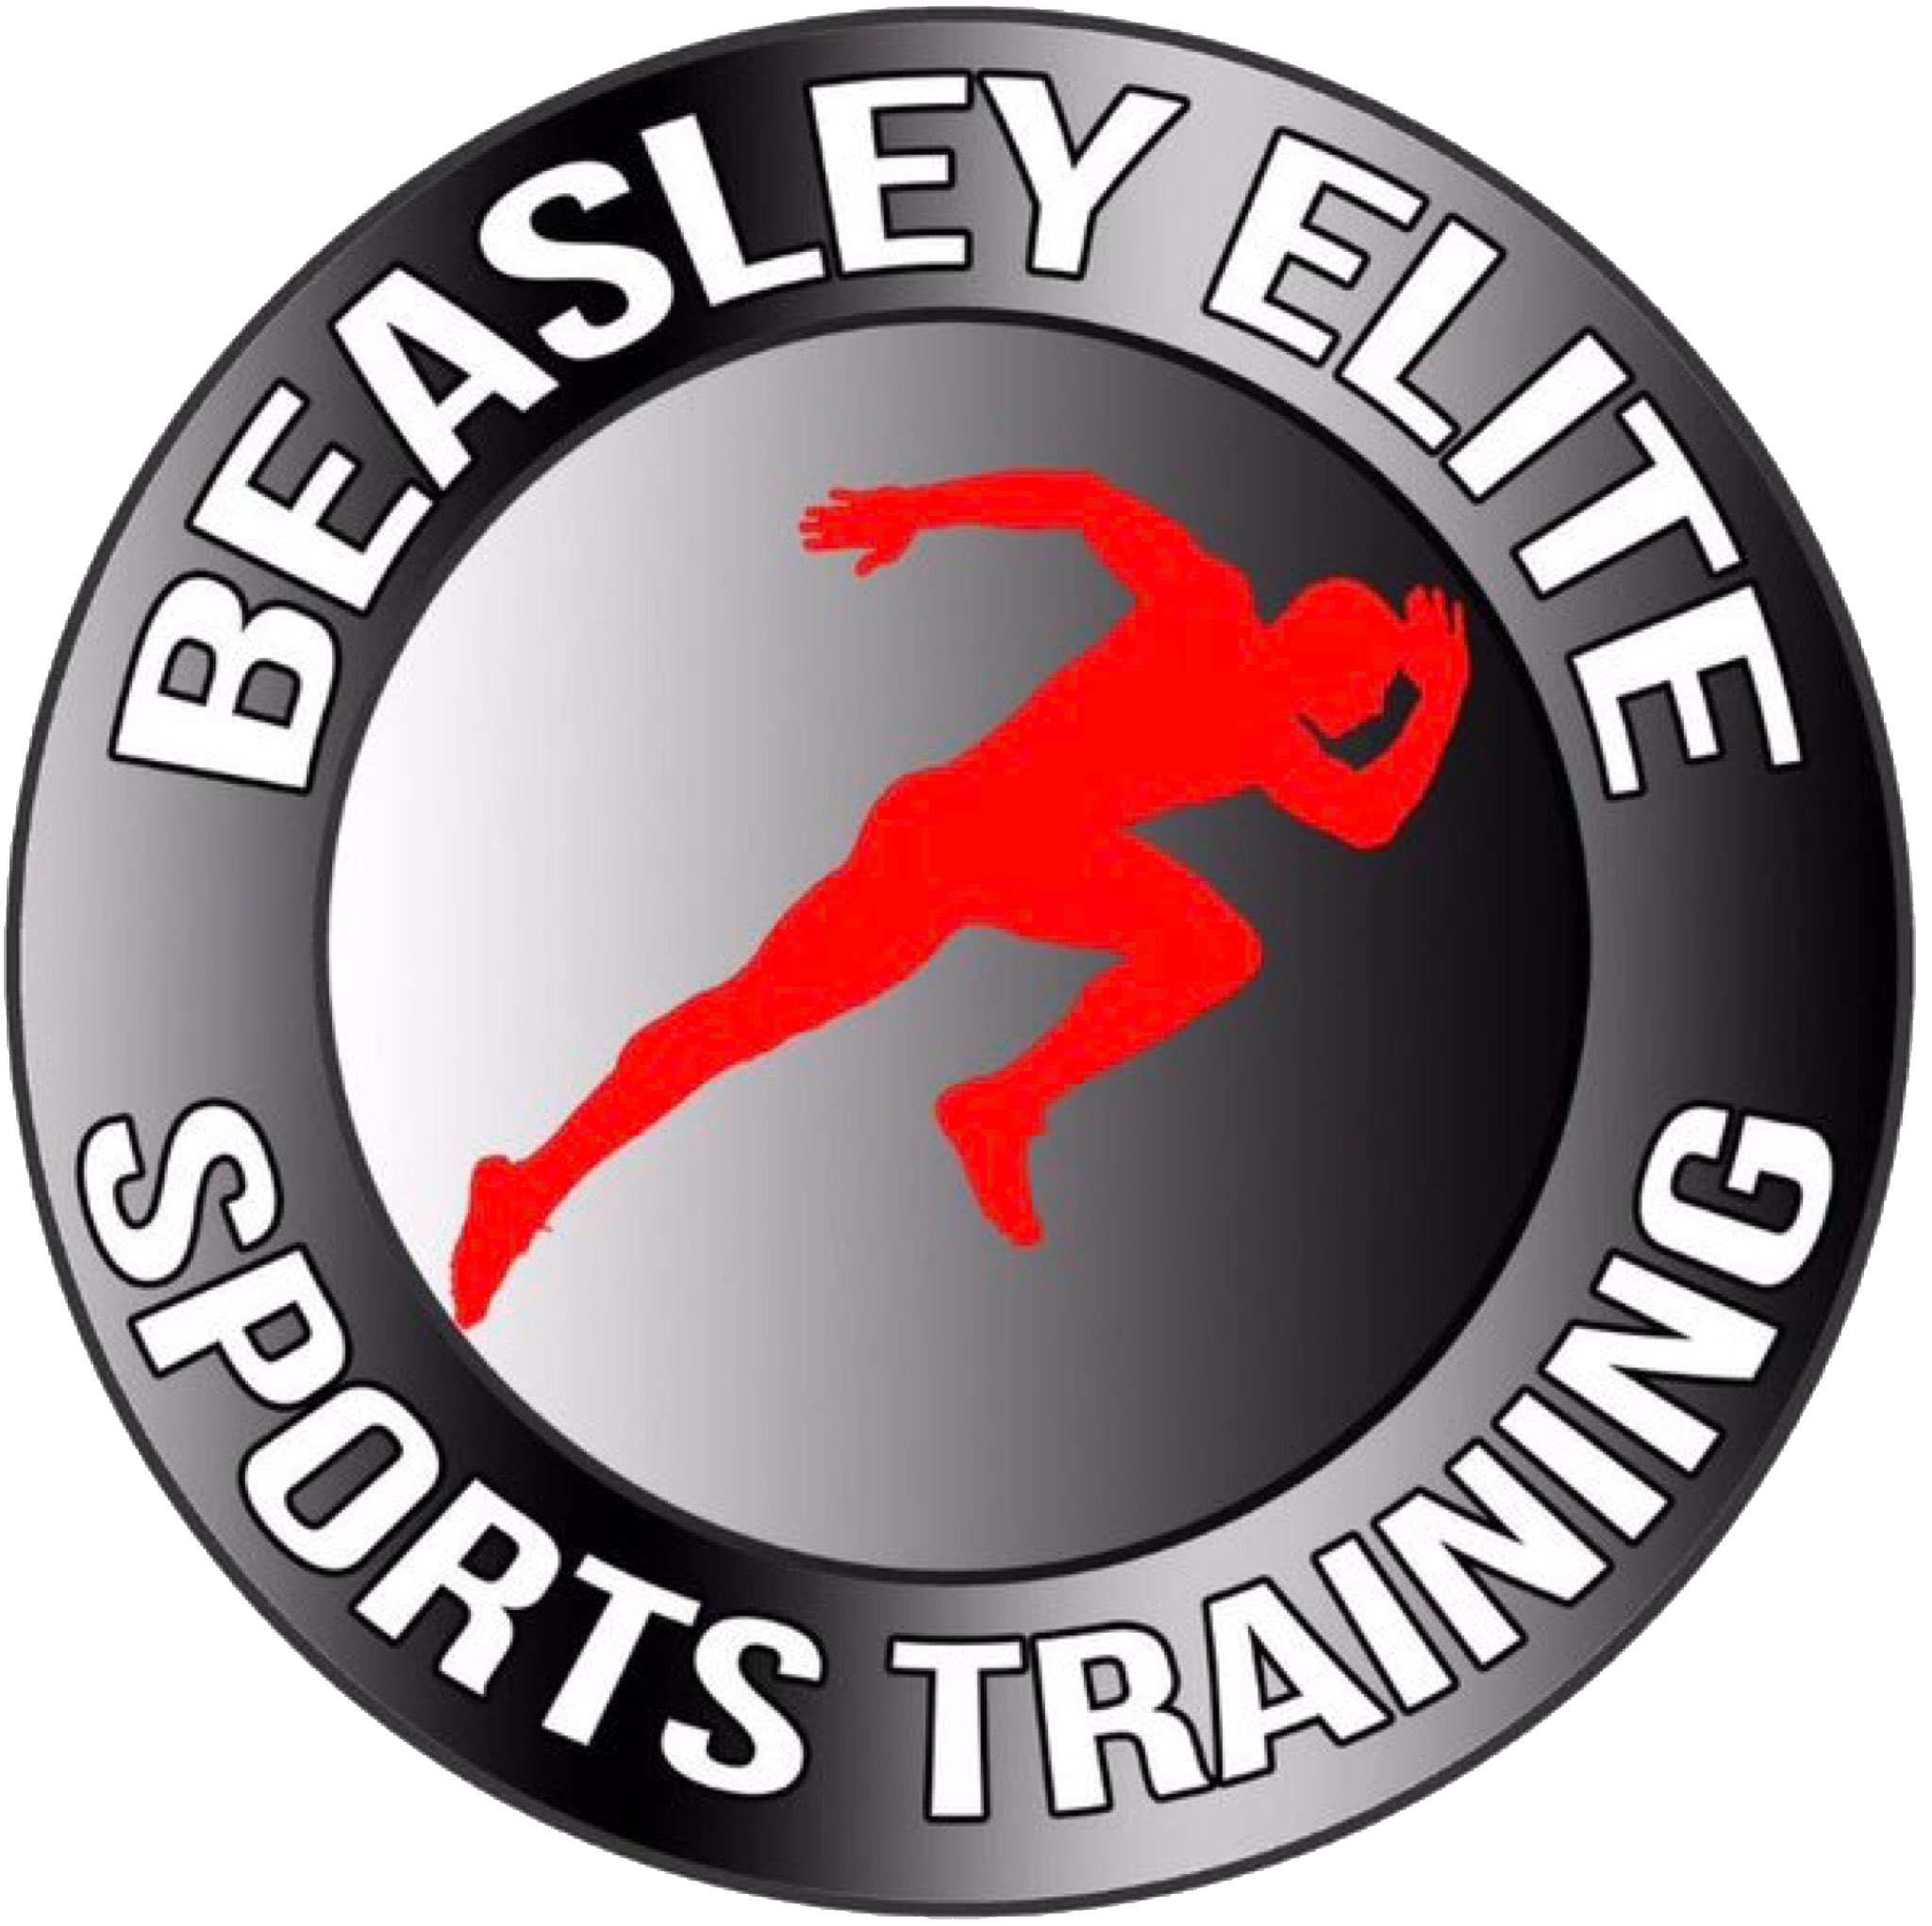 Beasley Elite Sports Training